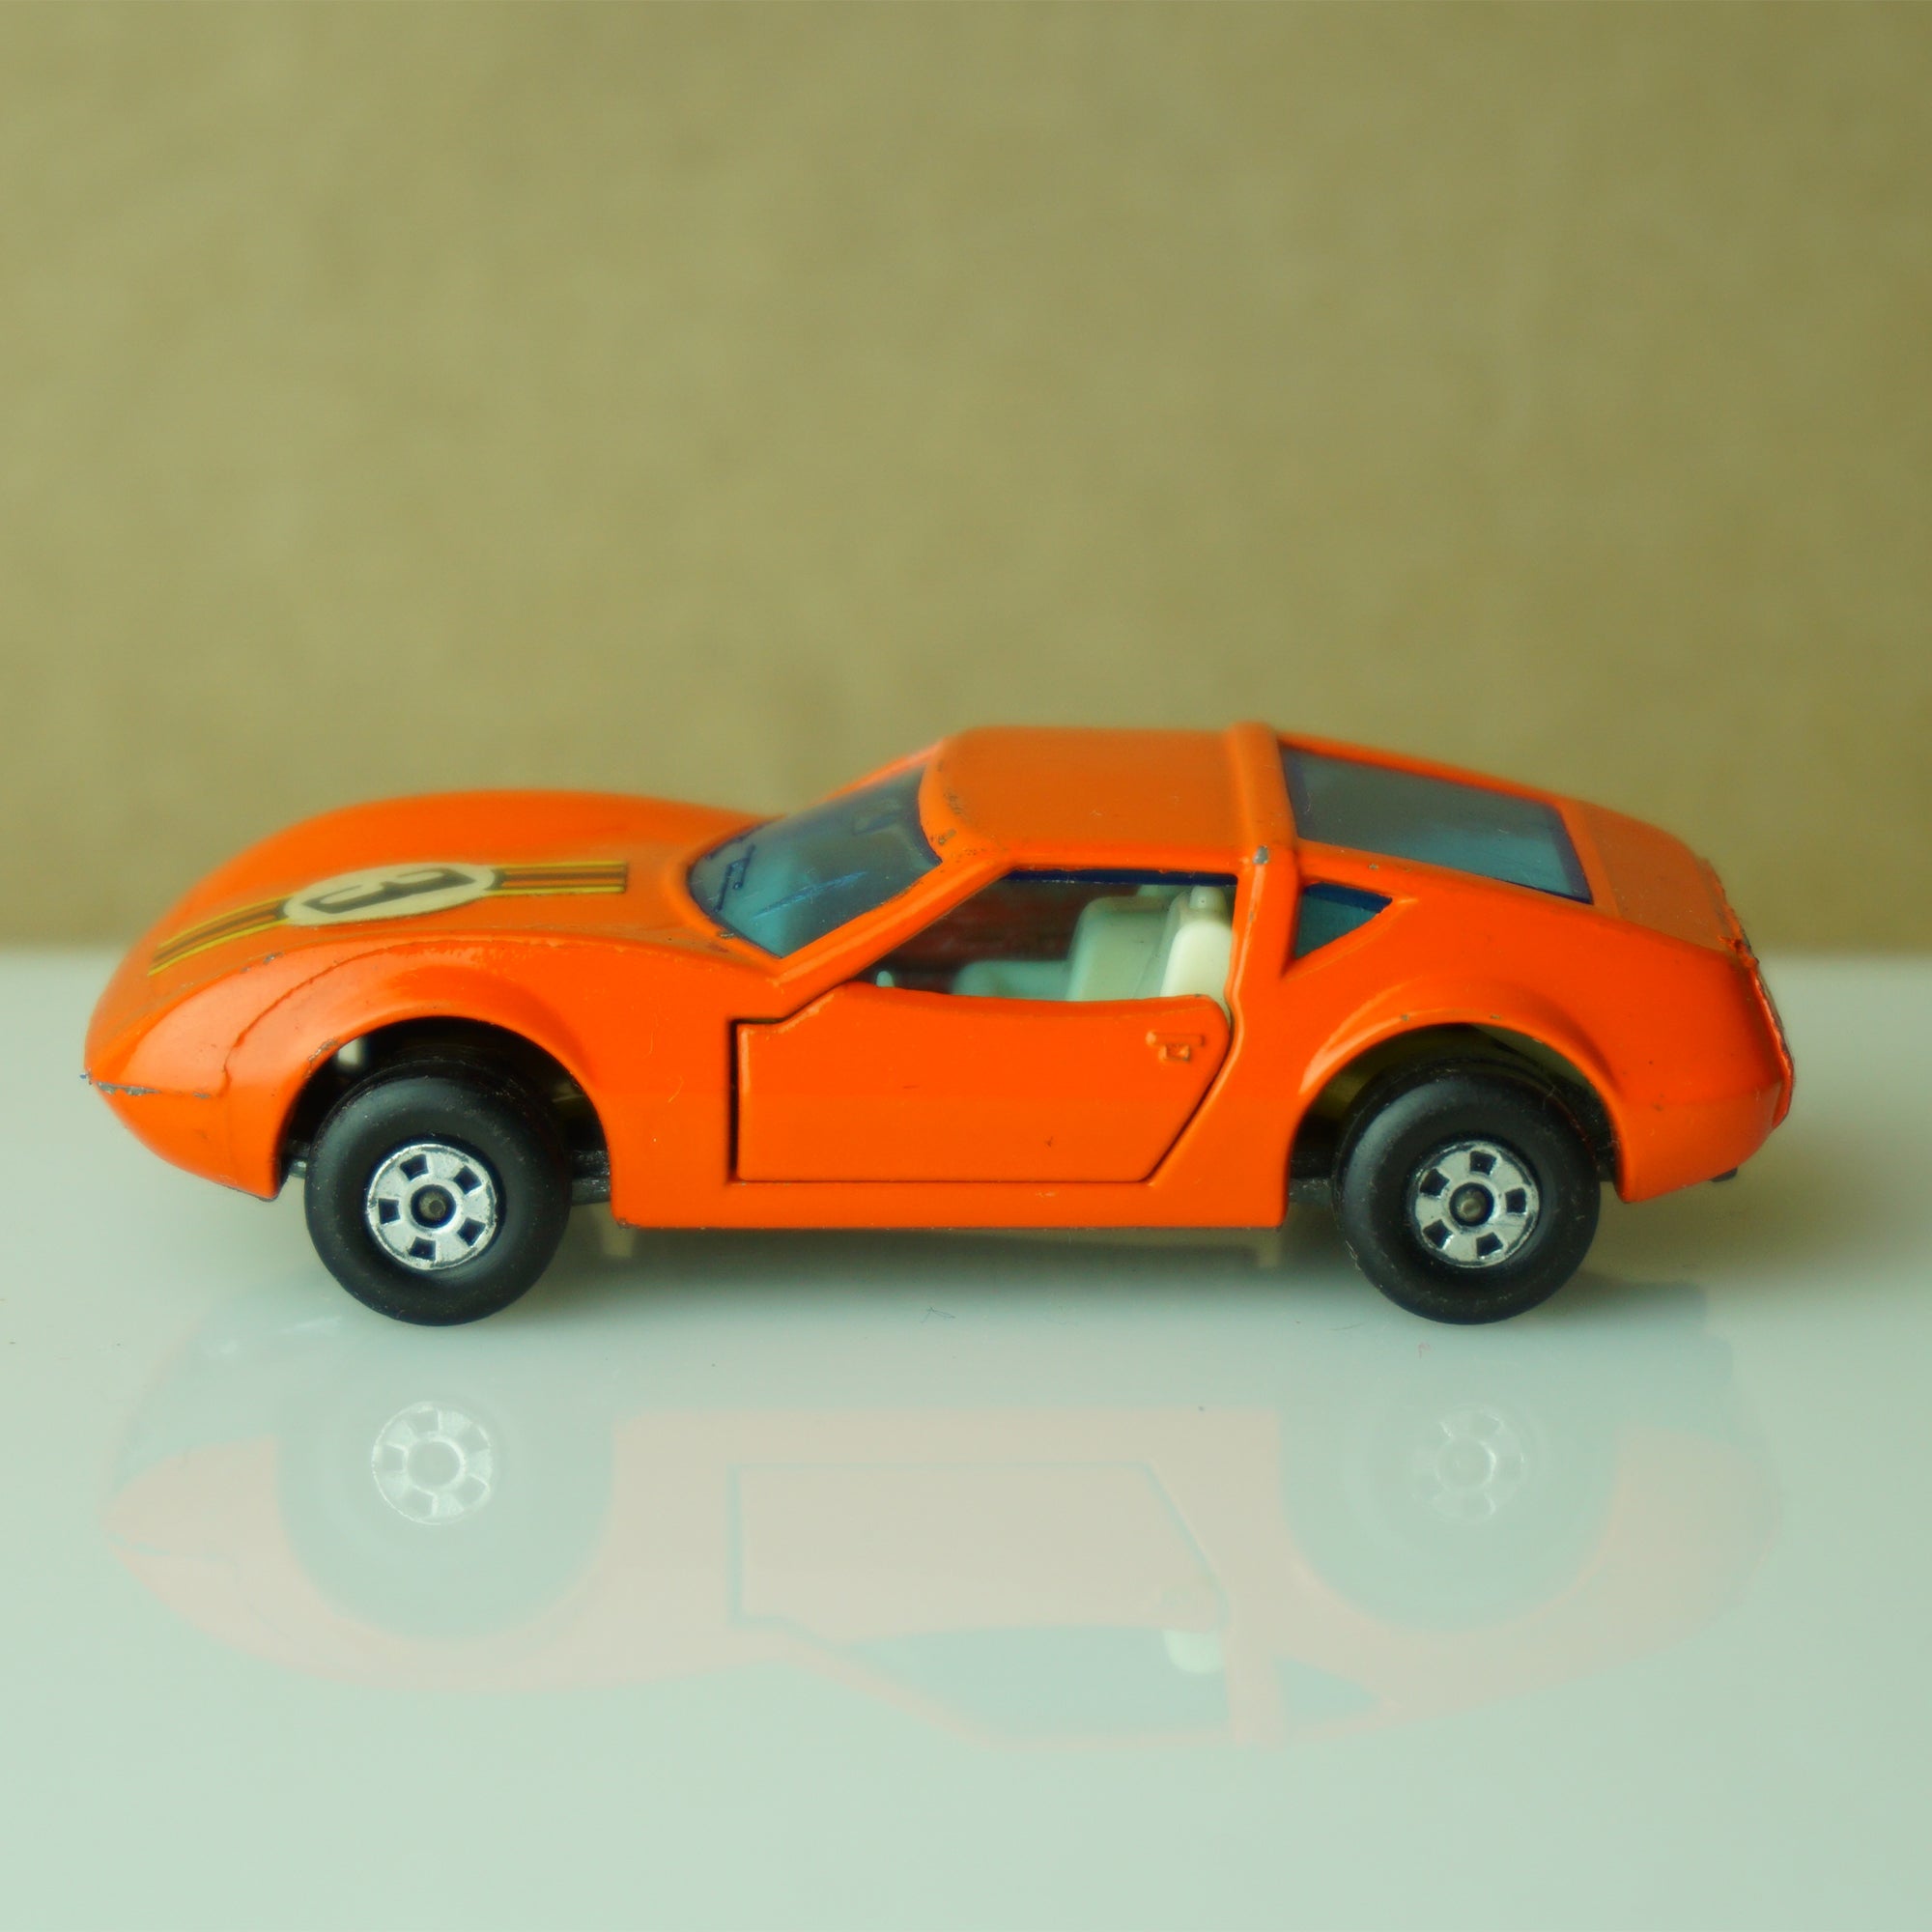 1973 Vintage Diecast MATCHBOX Superfast #3 Monteverdi Orange Car. Made in England by Lesney.